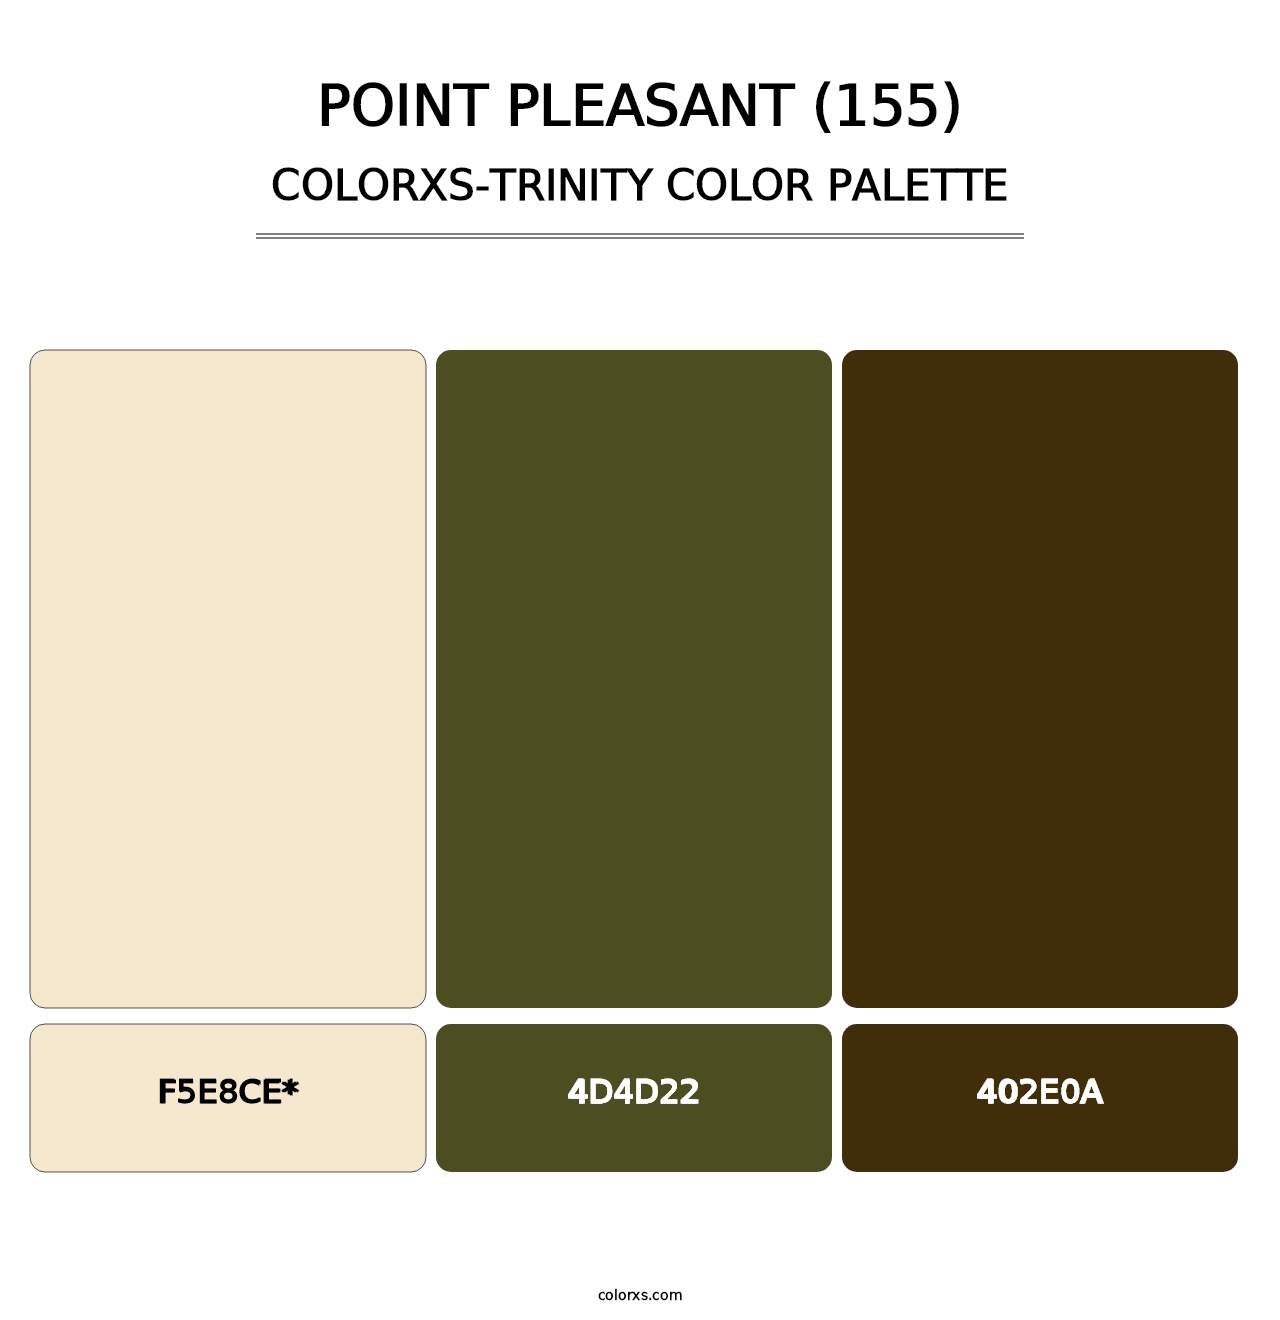 Point Pleasant (155) - Colorxs Trinity Palette